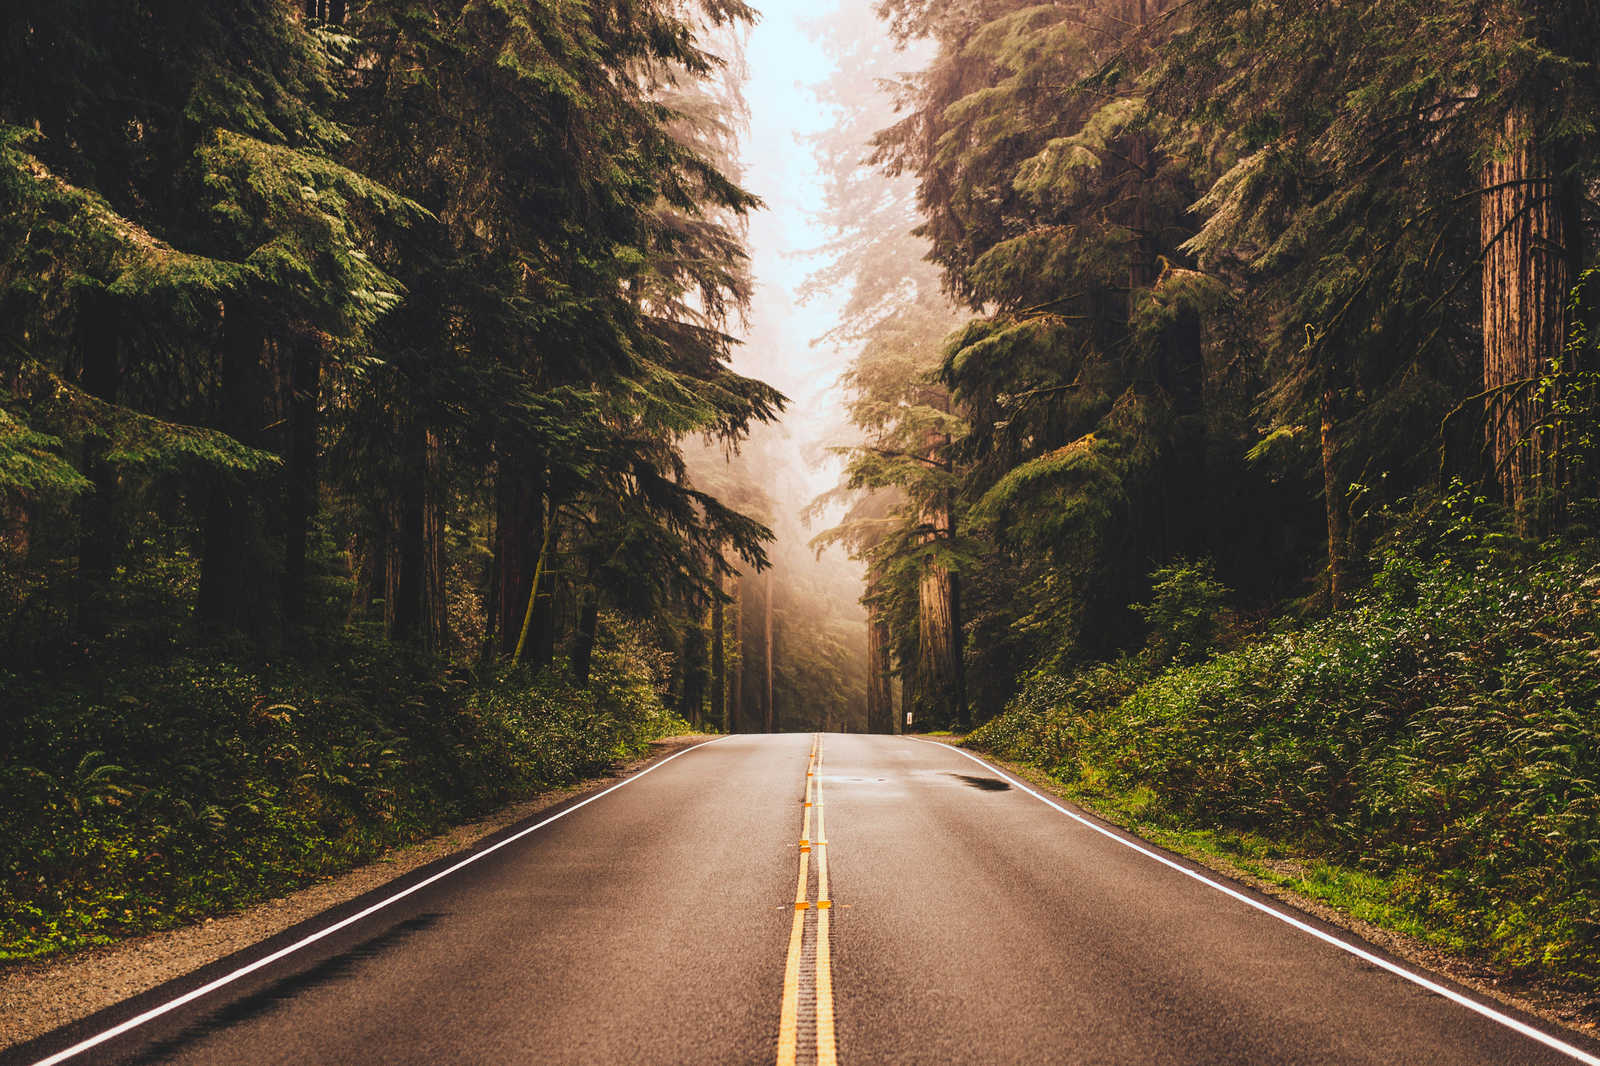             Leinwand mit American Highway im Wald – 0,90 m x 0,60 m
        